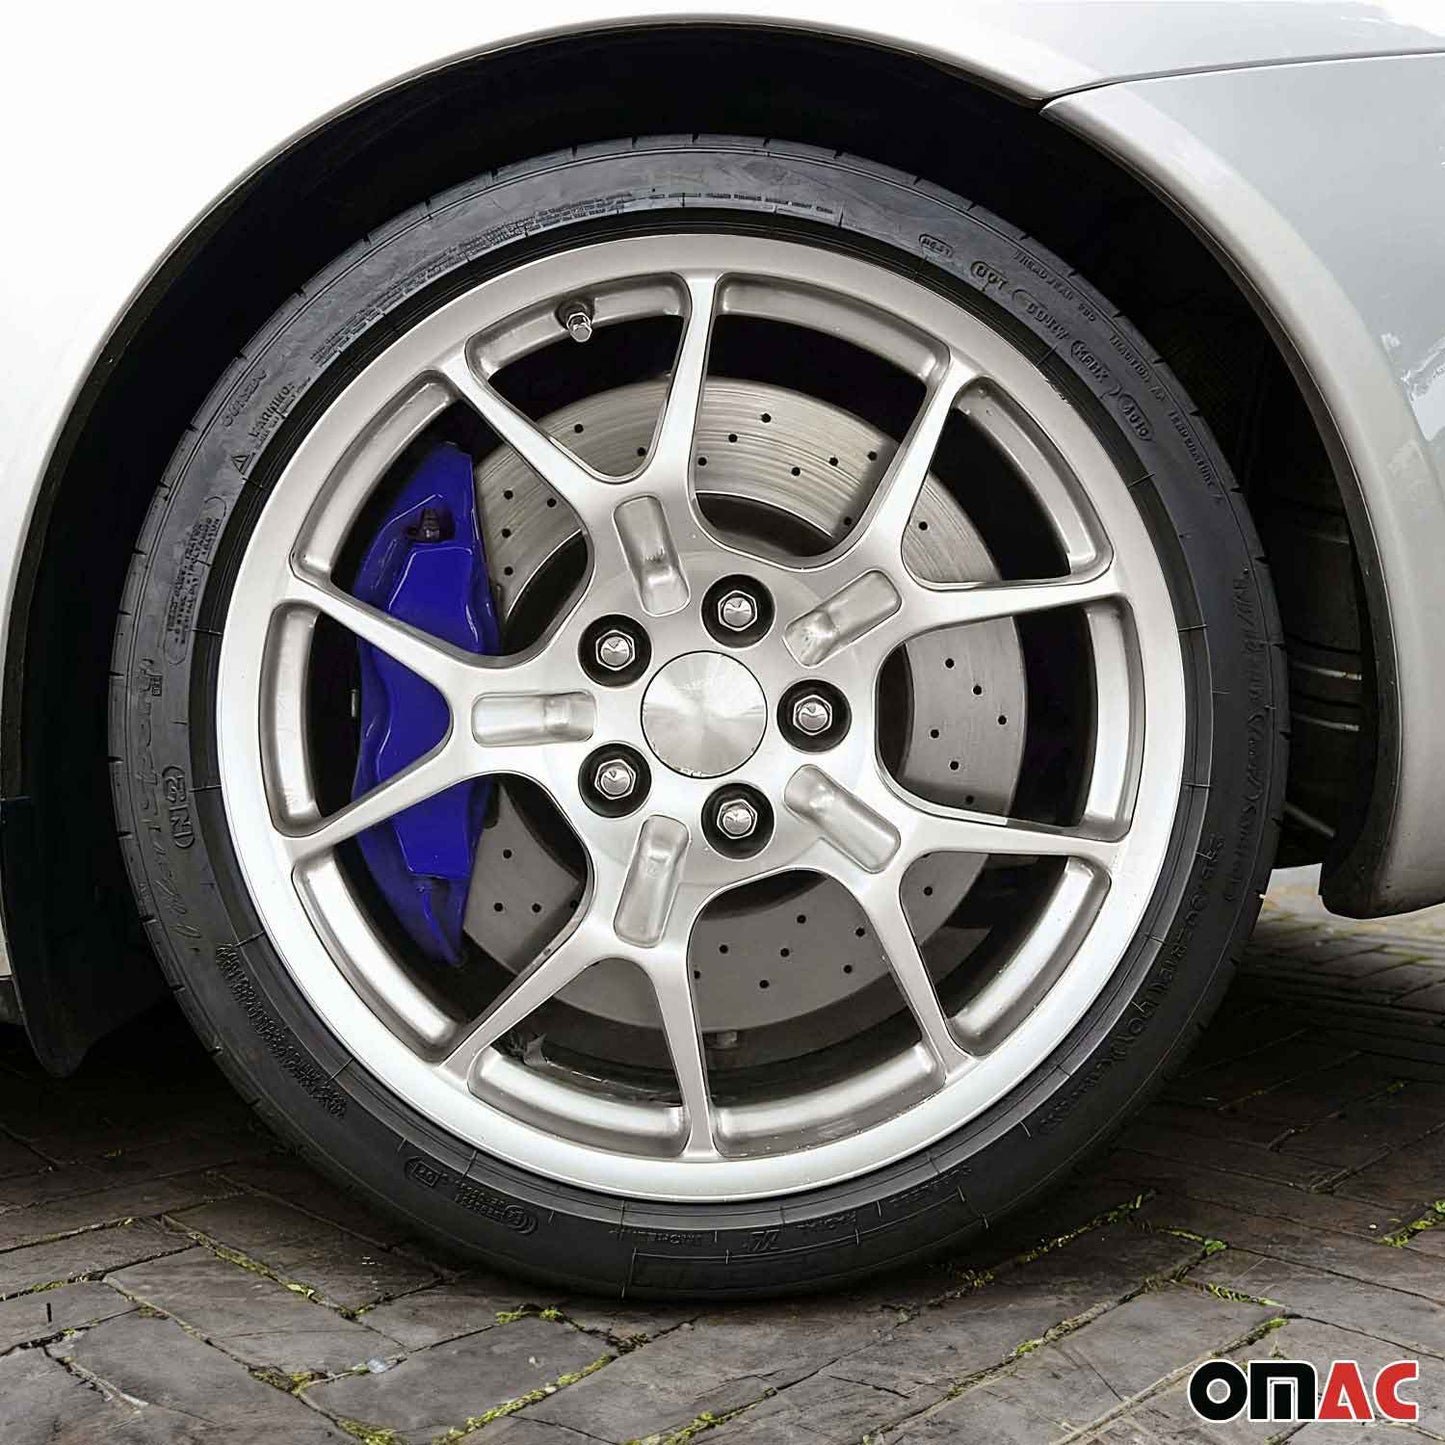 OMAC Brake Caliper Epoxy Based Car Paint Kit¬†Hawaii Blue Glossy High-Temp 96AA1013